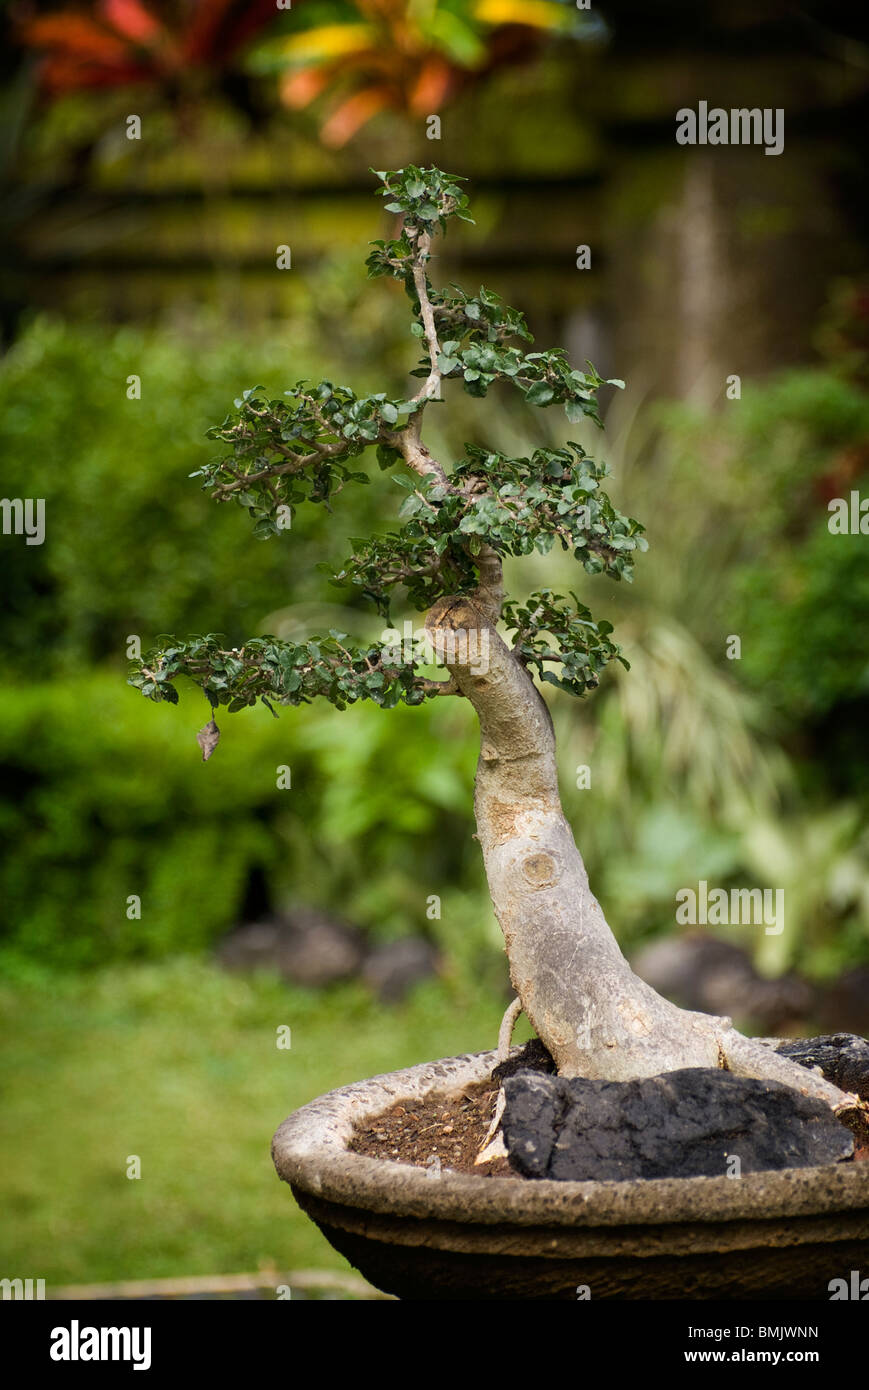 On the grounds of Villa Sankih, Umajero, Bali, the owner has created a beautiful bonsai garden of expert quality. Stock Photo